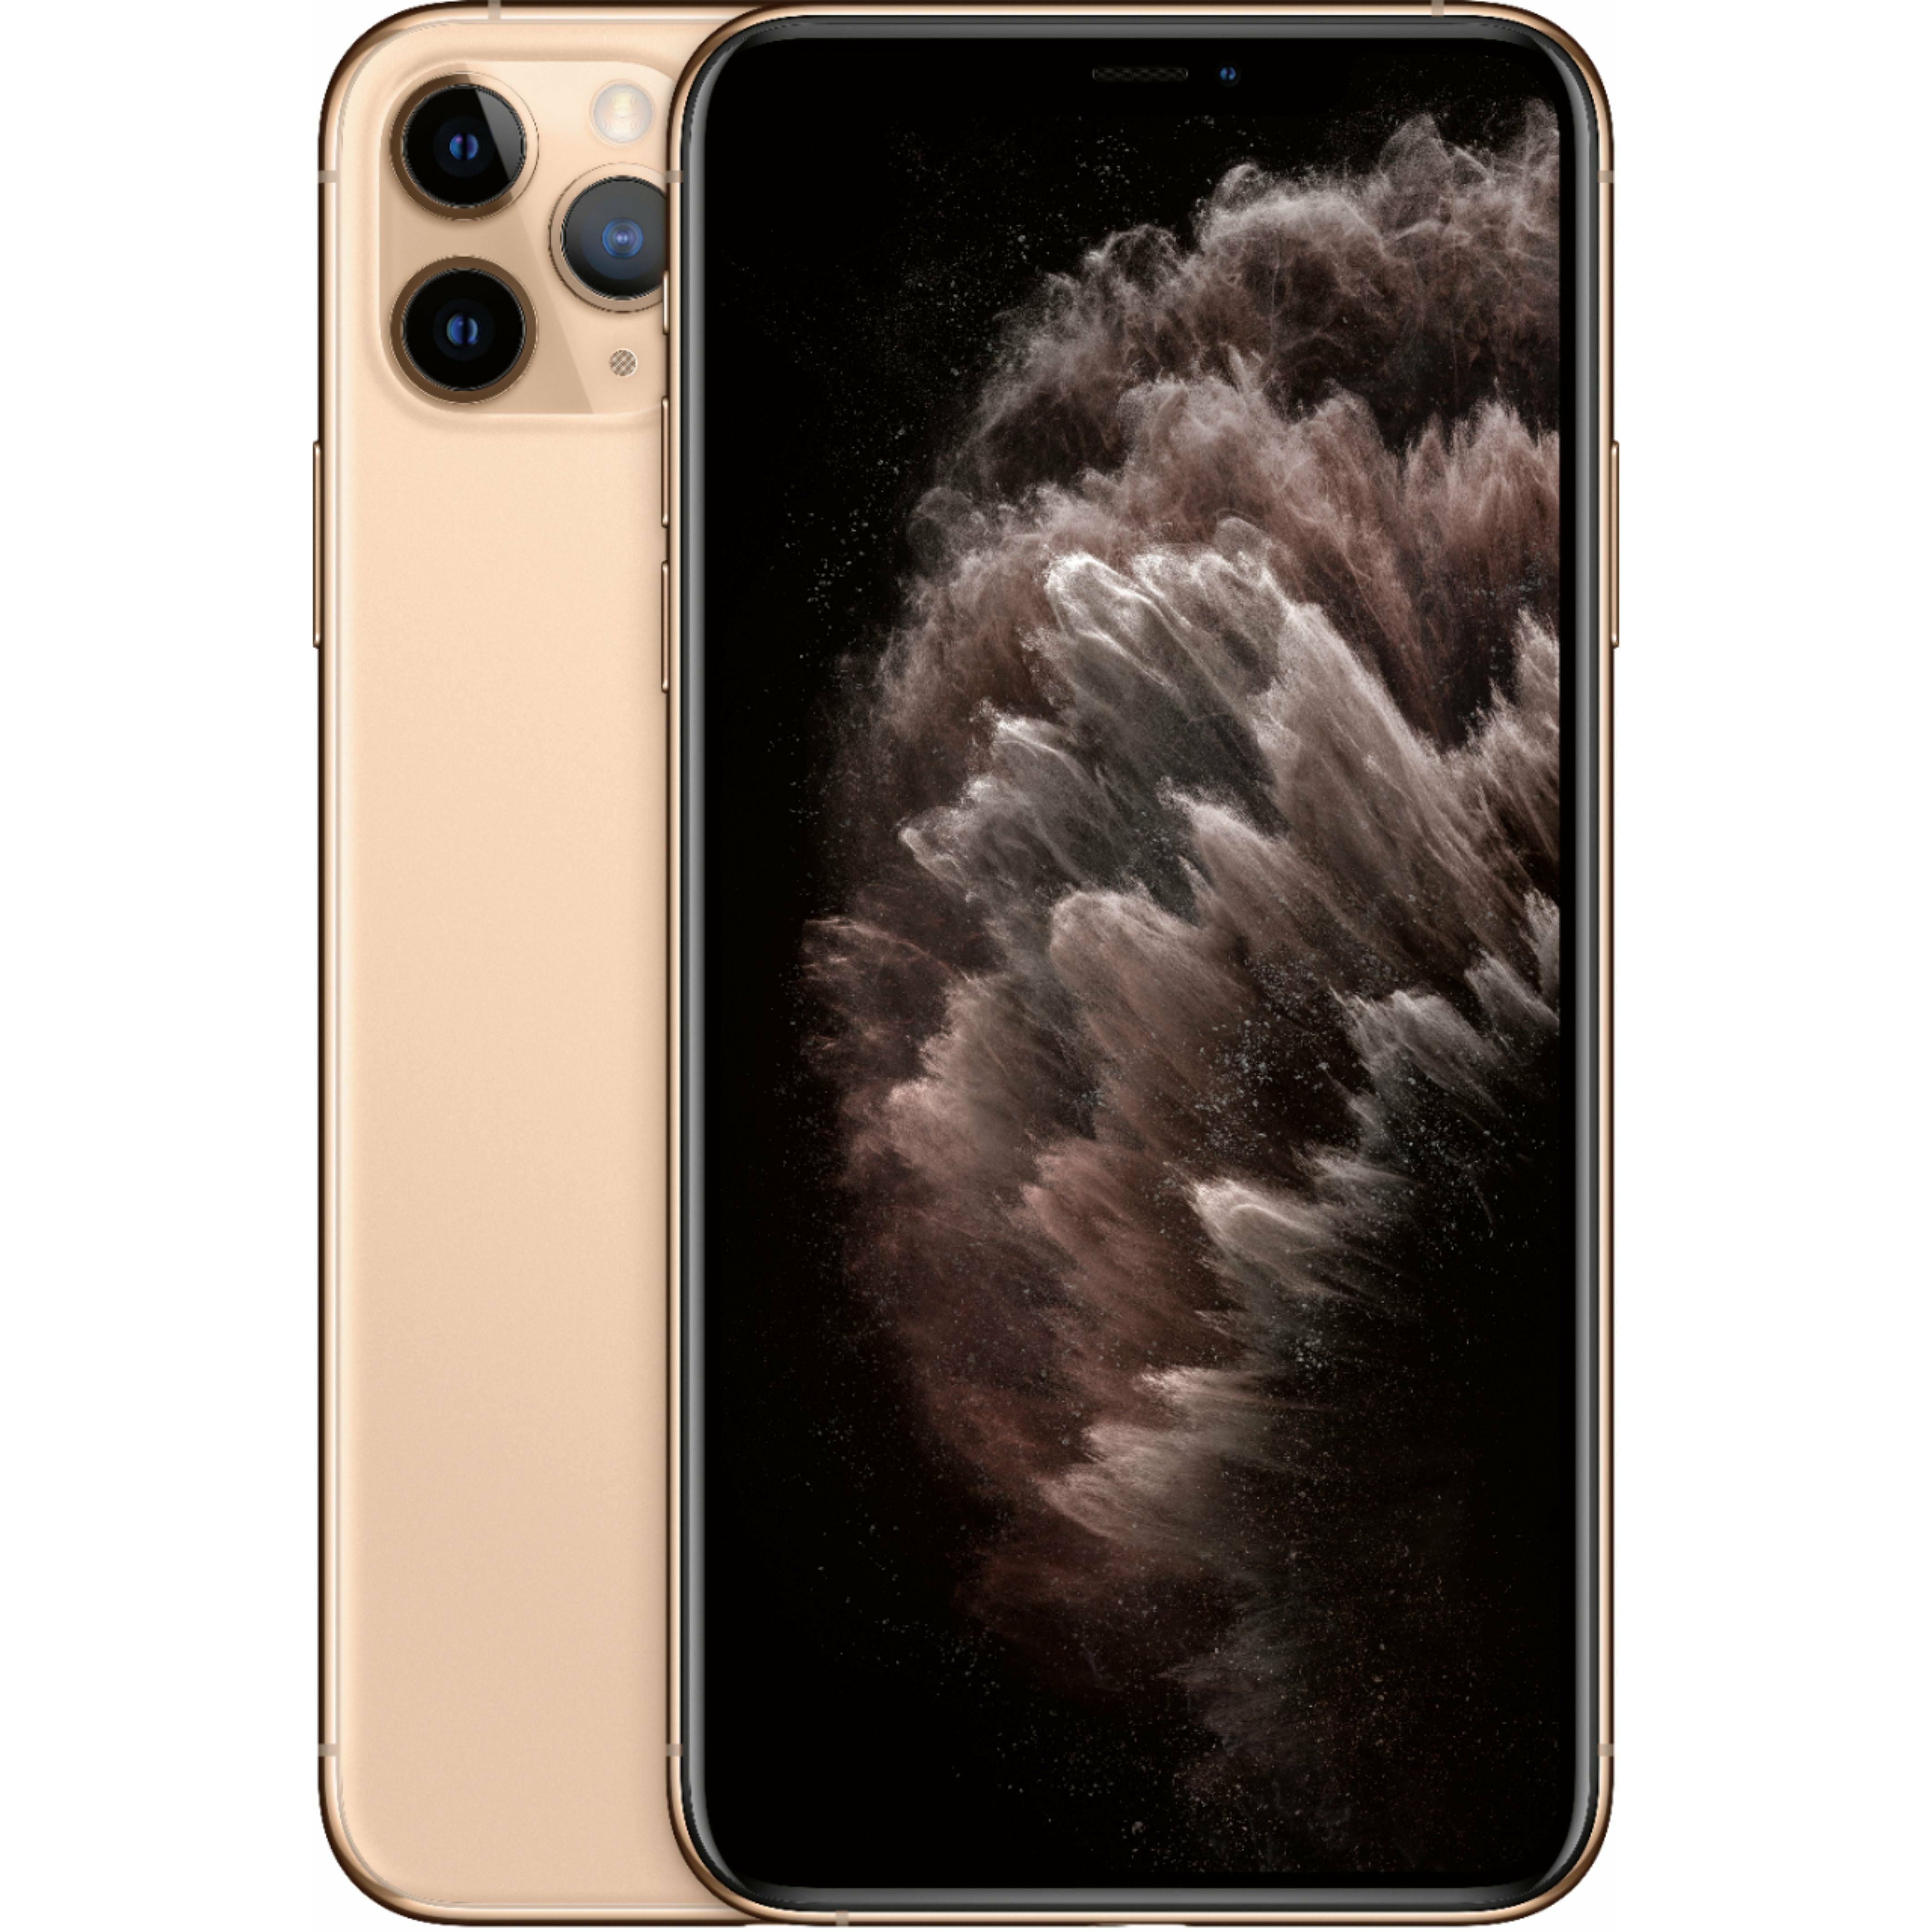 Apple iPhone 11 Pro - 256GB (Unlocked) - Gold